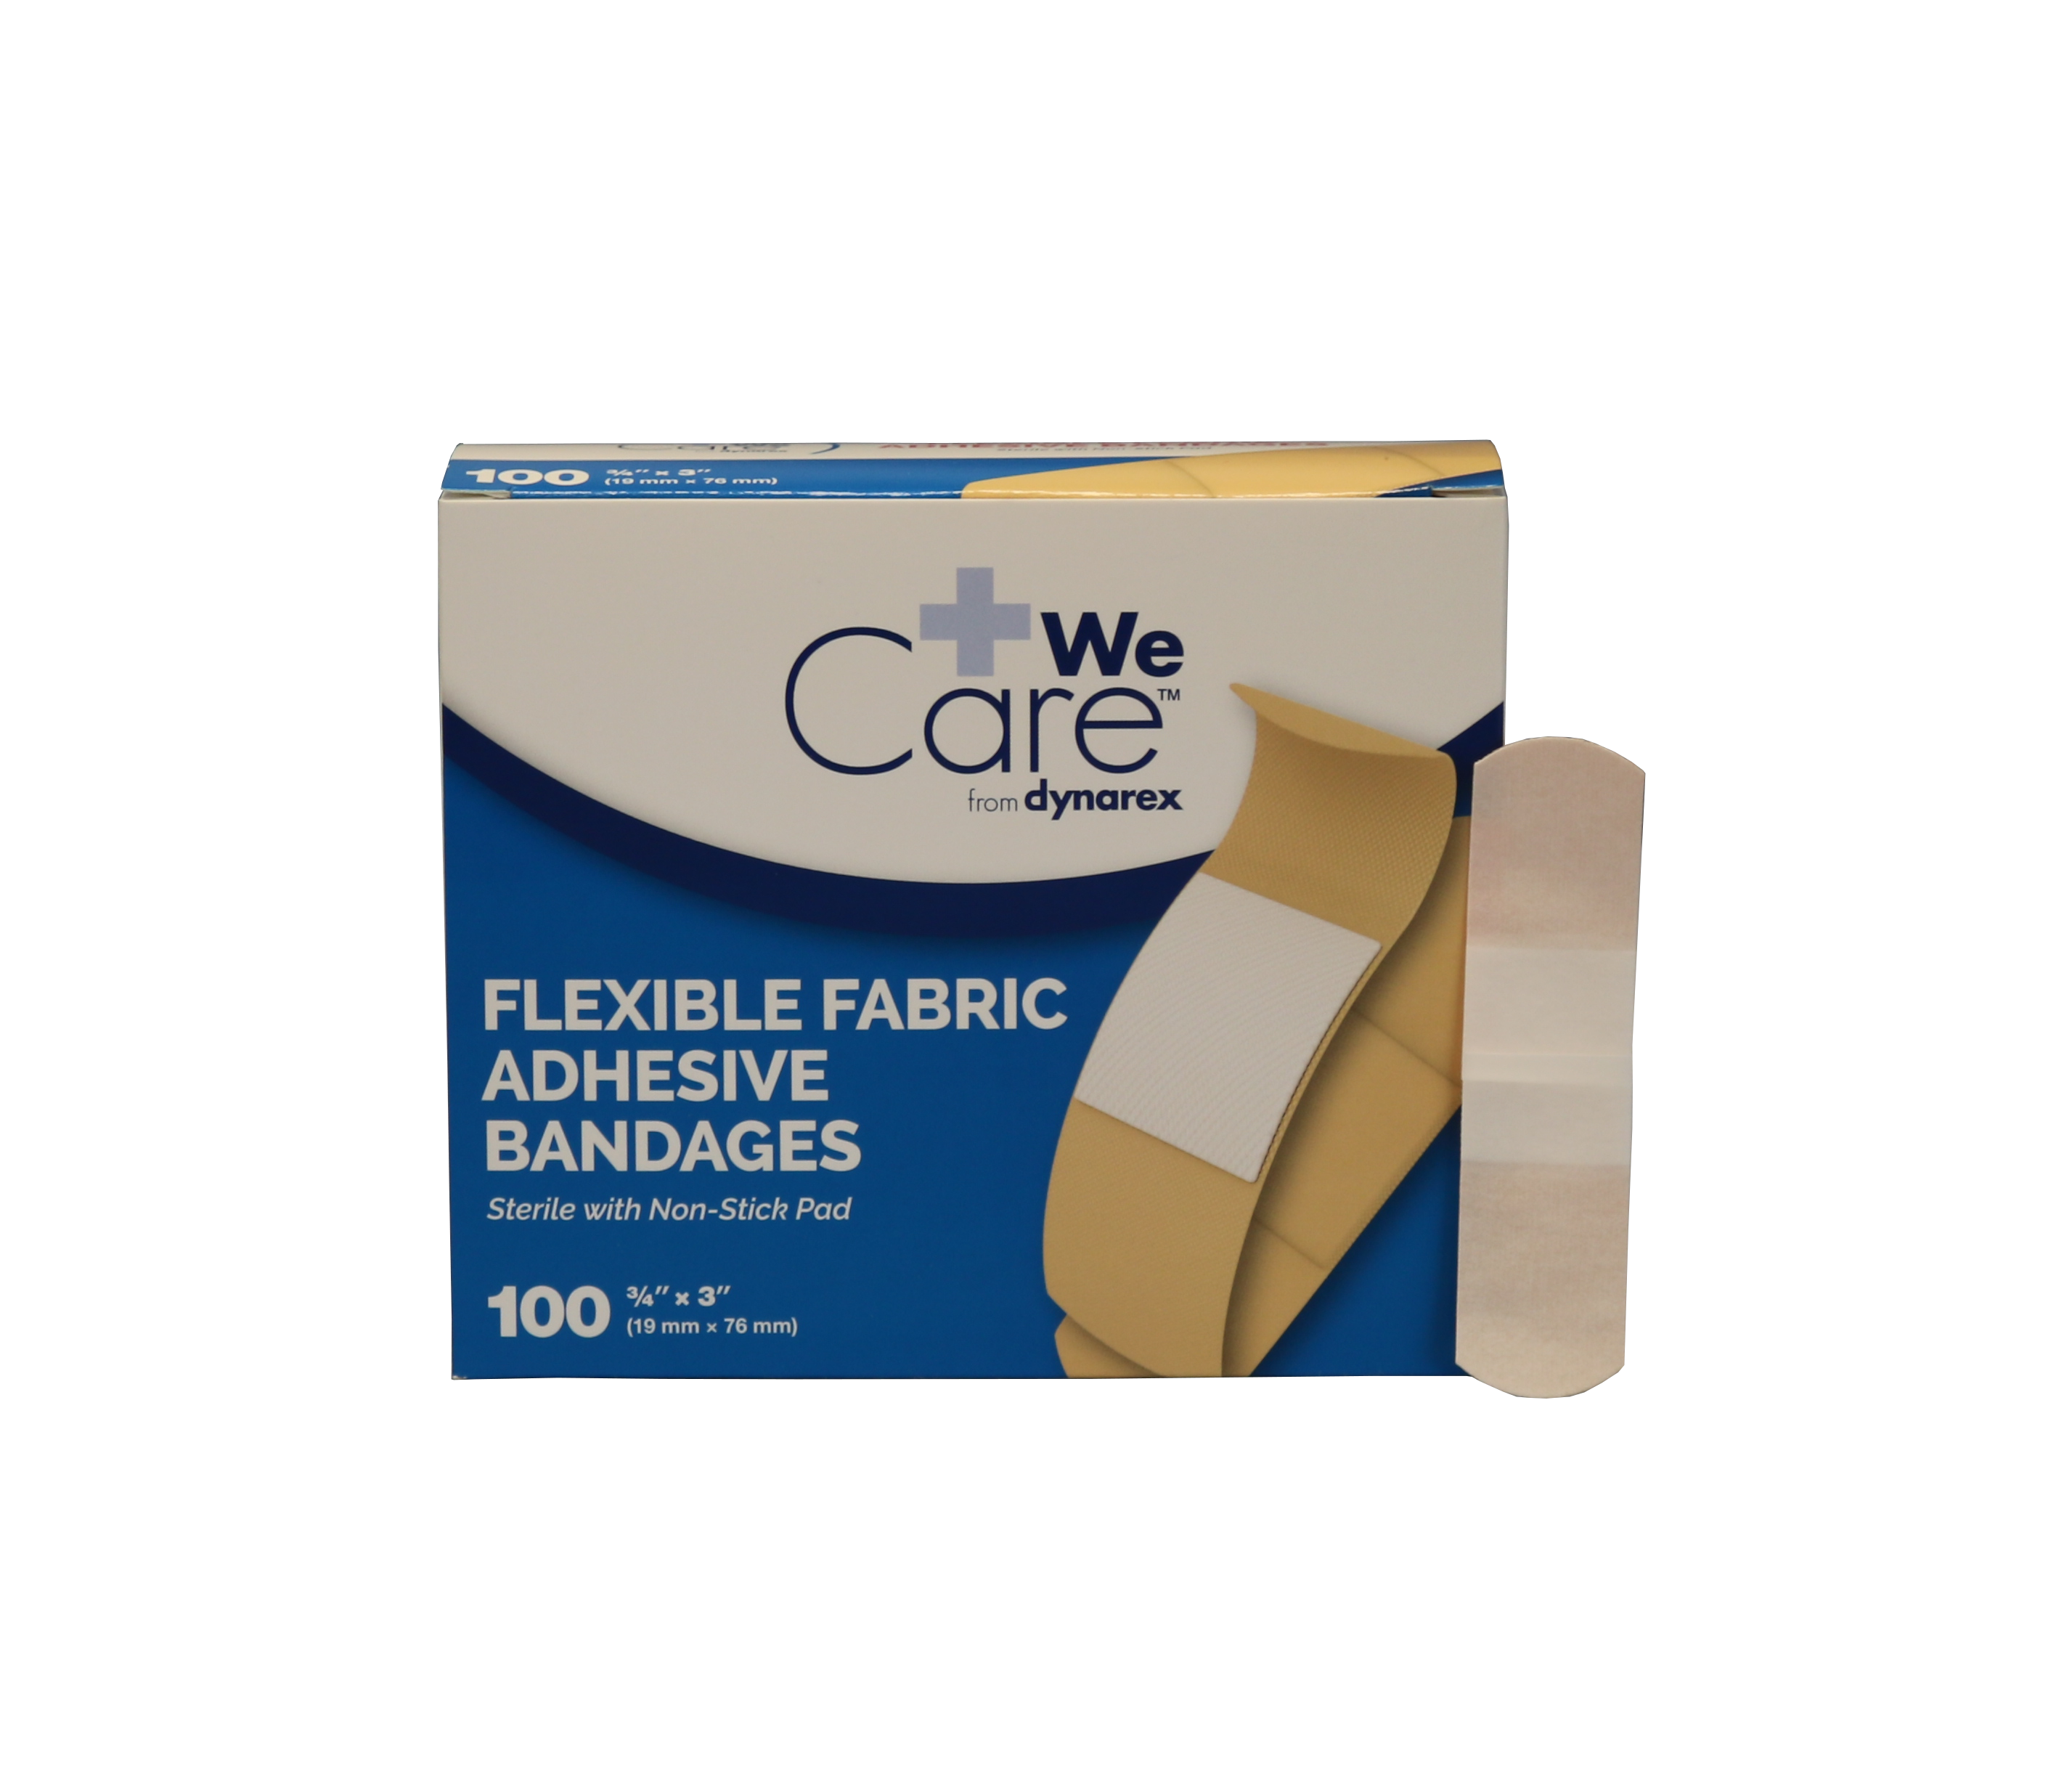 Dynarex Flexible Fabric Adhesive Bandages 3/4 X 3 - 100/box